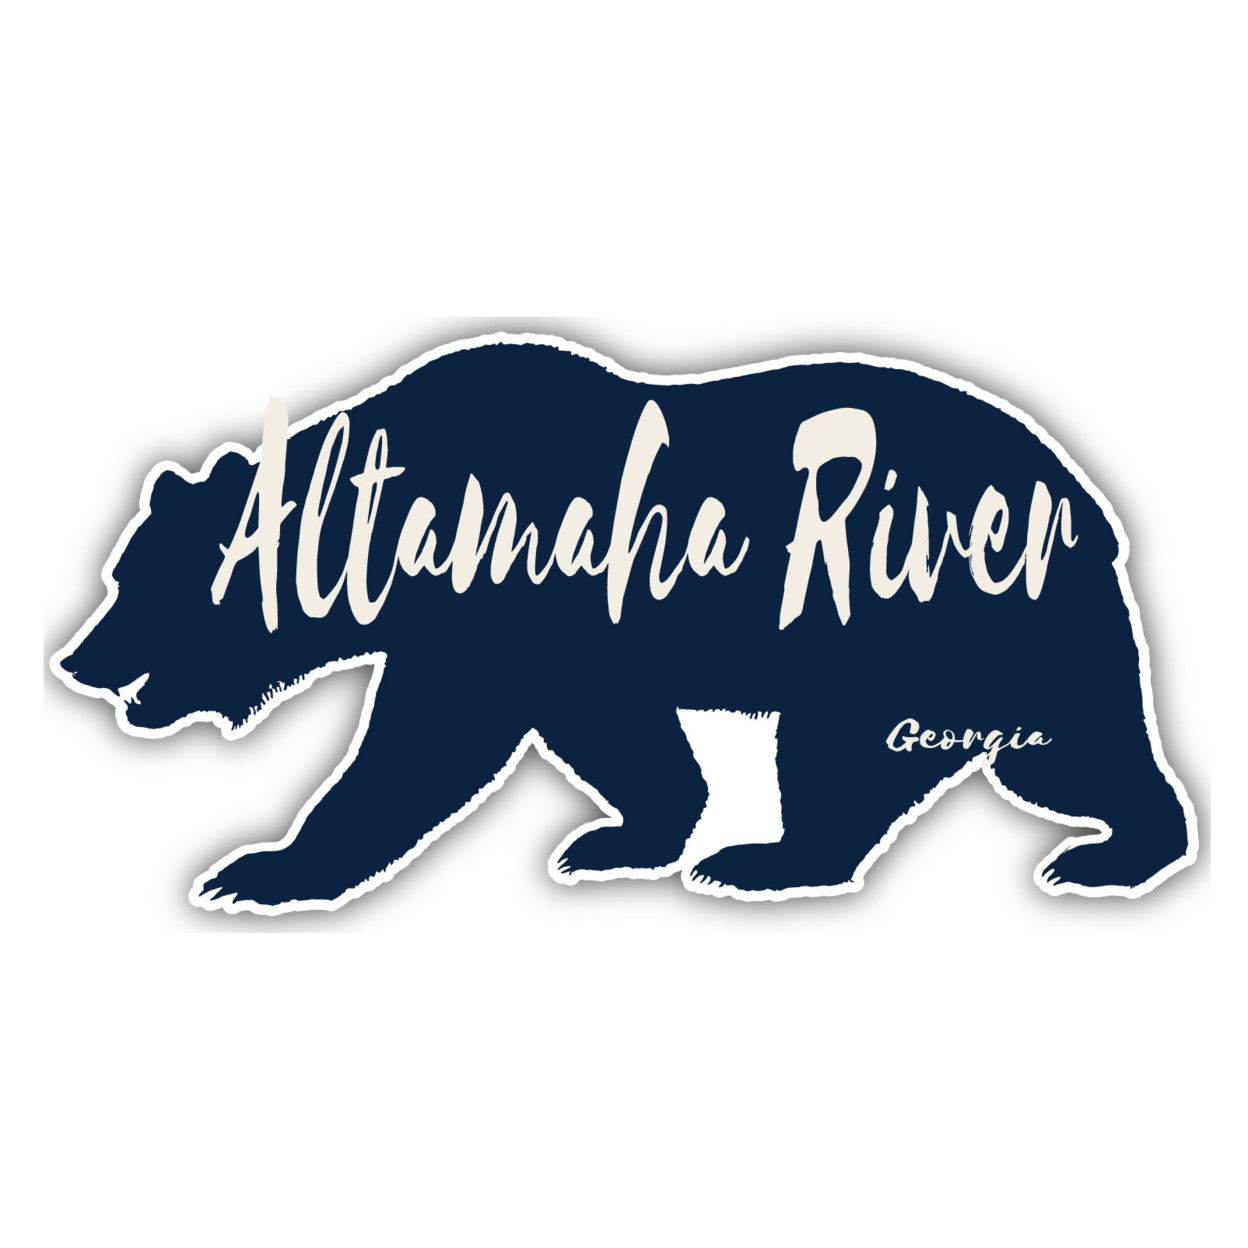 Altamaha River Georgia Souvenir Decorative Stickers (Choose Theme And Size) - 4-Pack, 6-Inch, Bear